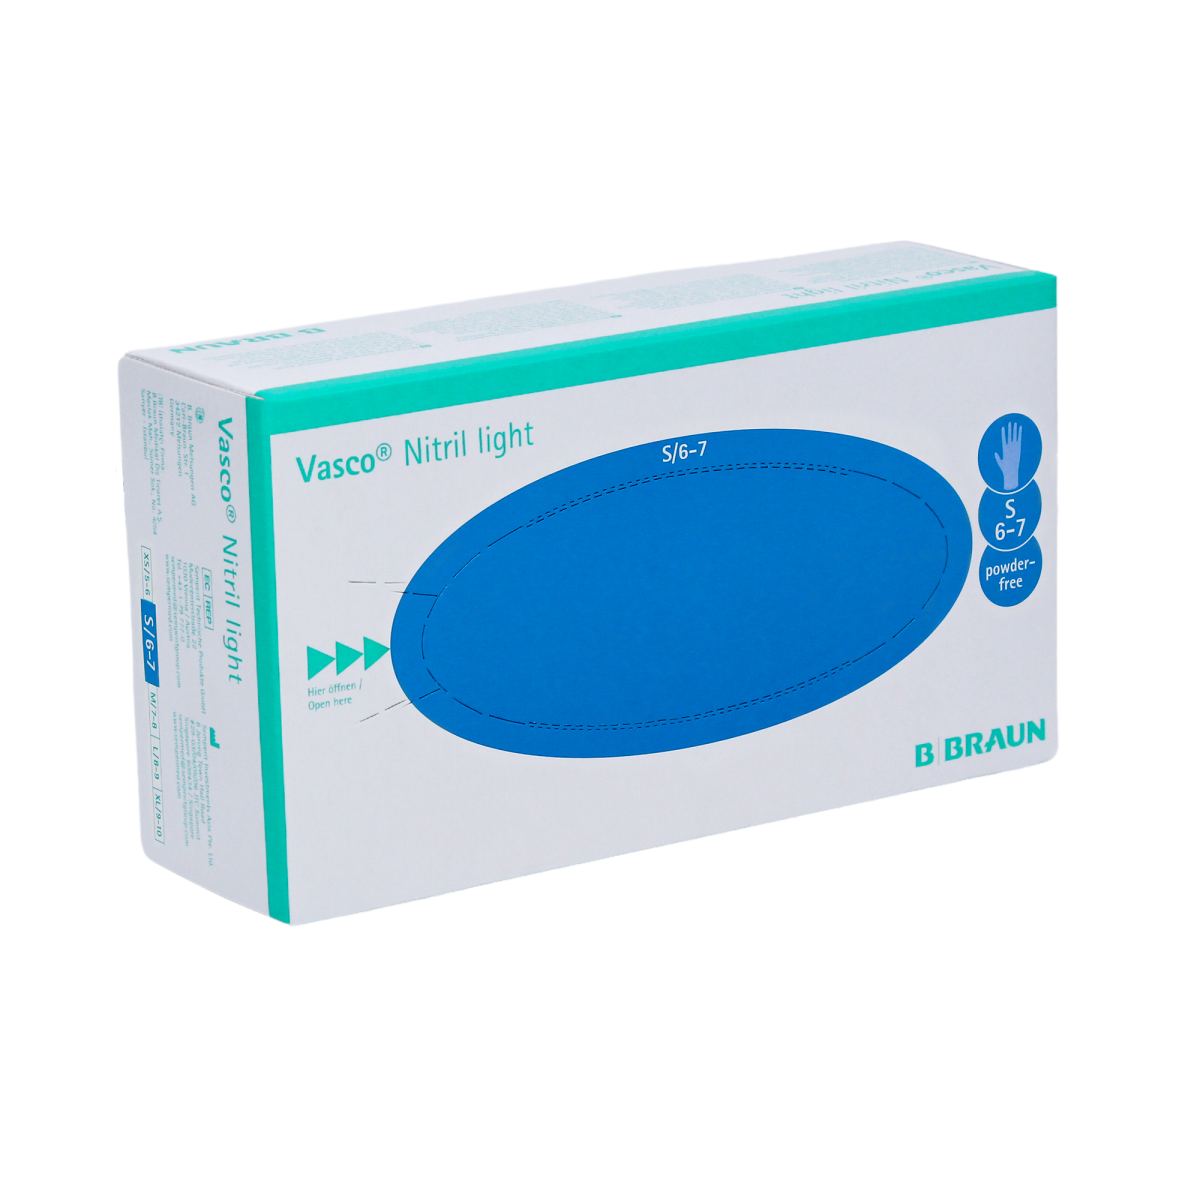 b. braun vascoÂ® nitril light untersuchungshandschuhe; ; 100 stÃ¼ck / packung blau